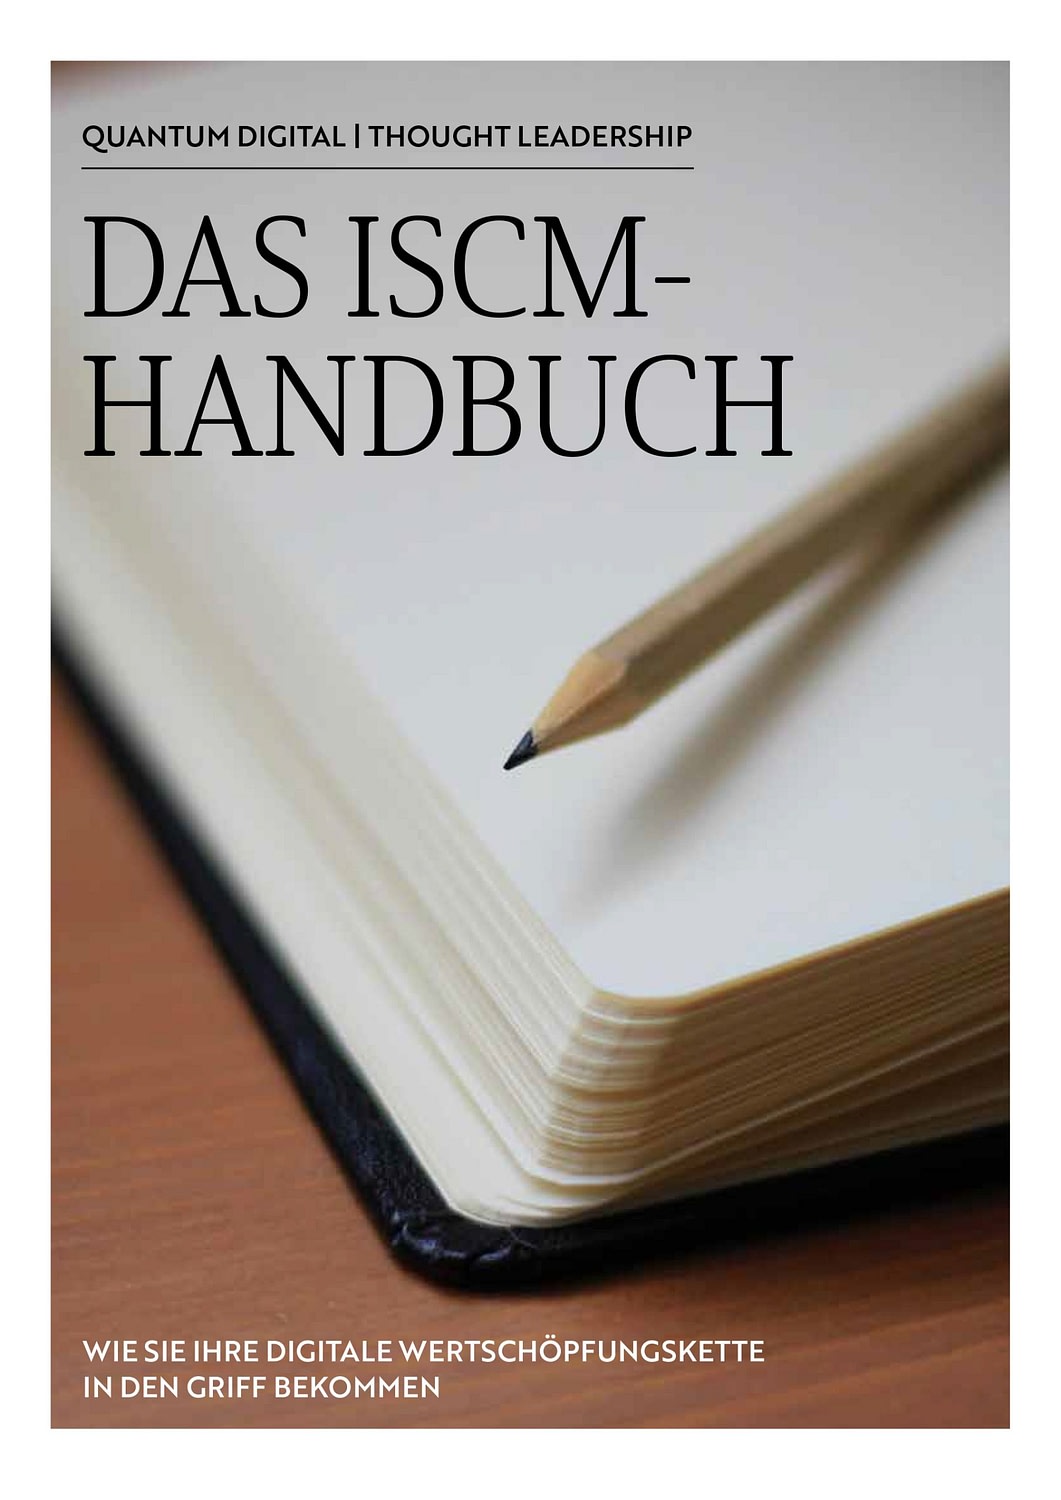 Thought Leadership – Das ISCM-Handbuch